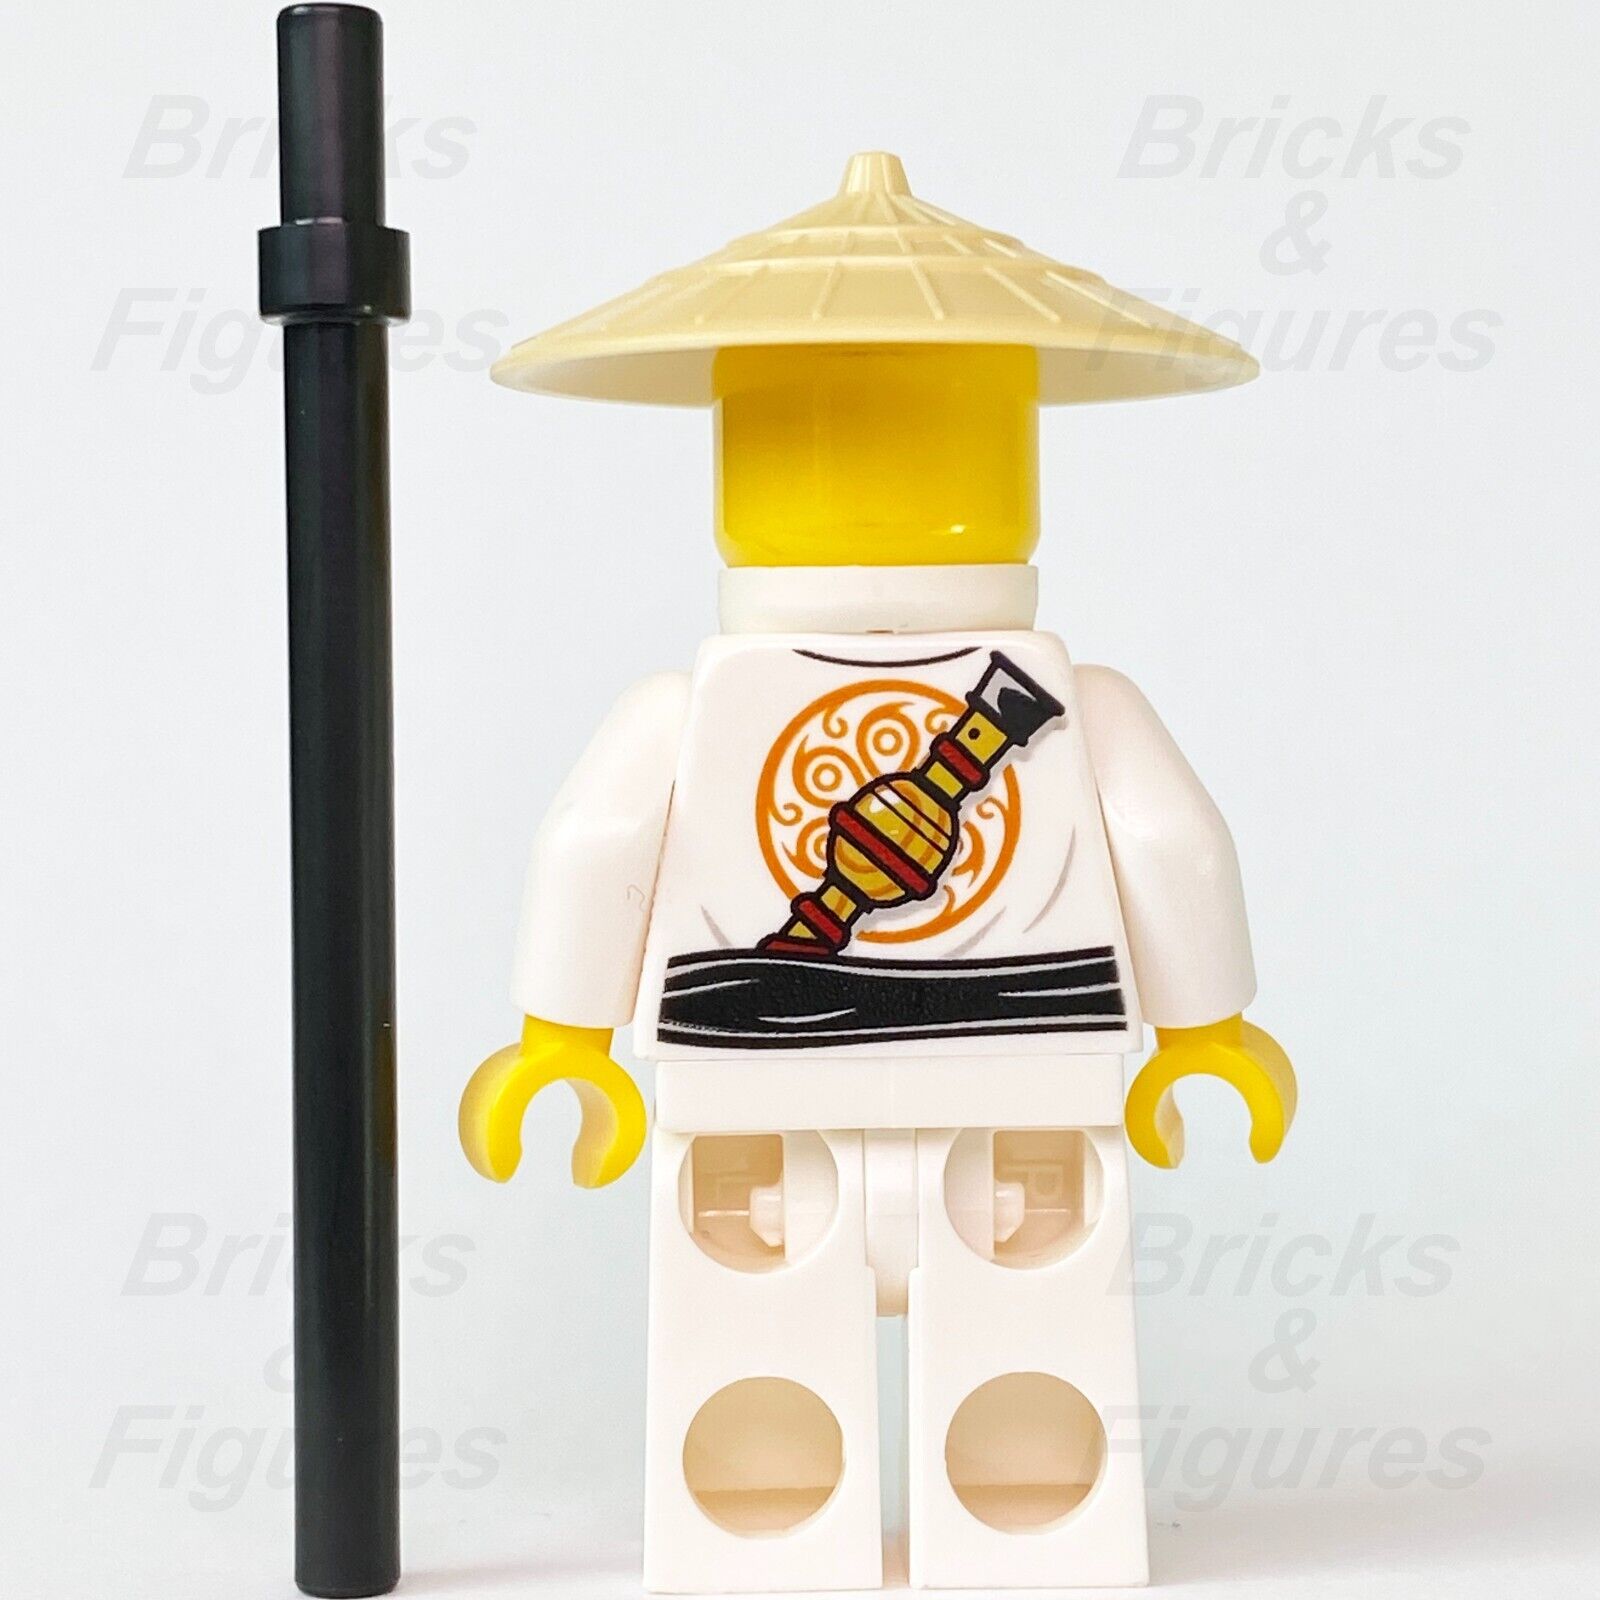 LEGO Ninjago Wu Sensei Minifigure The Hands of Time Master Ninja 70626 njo290